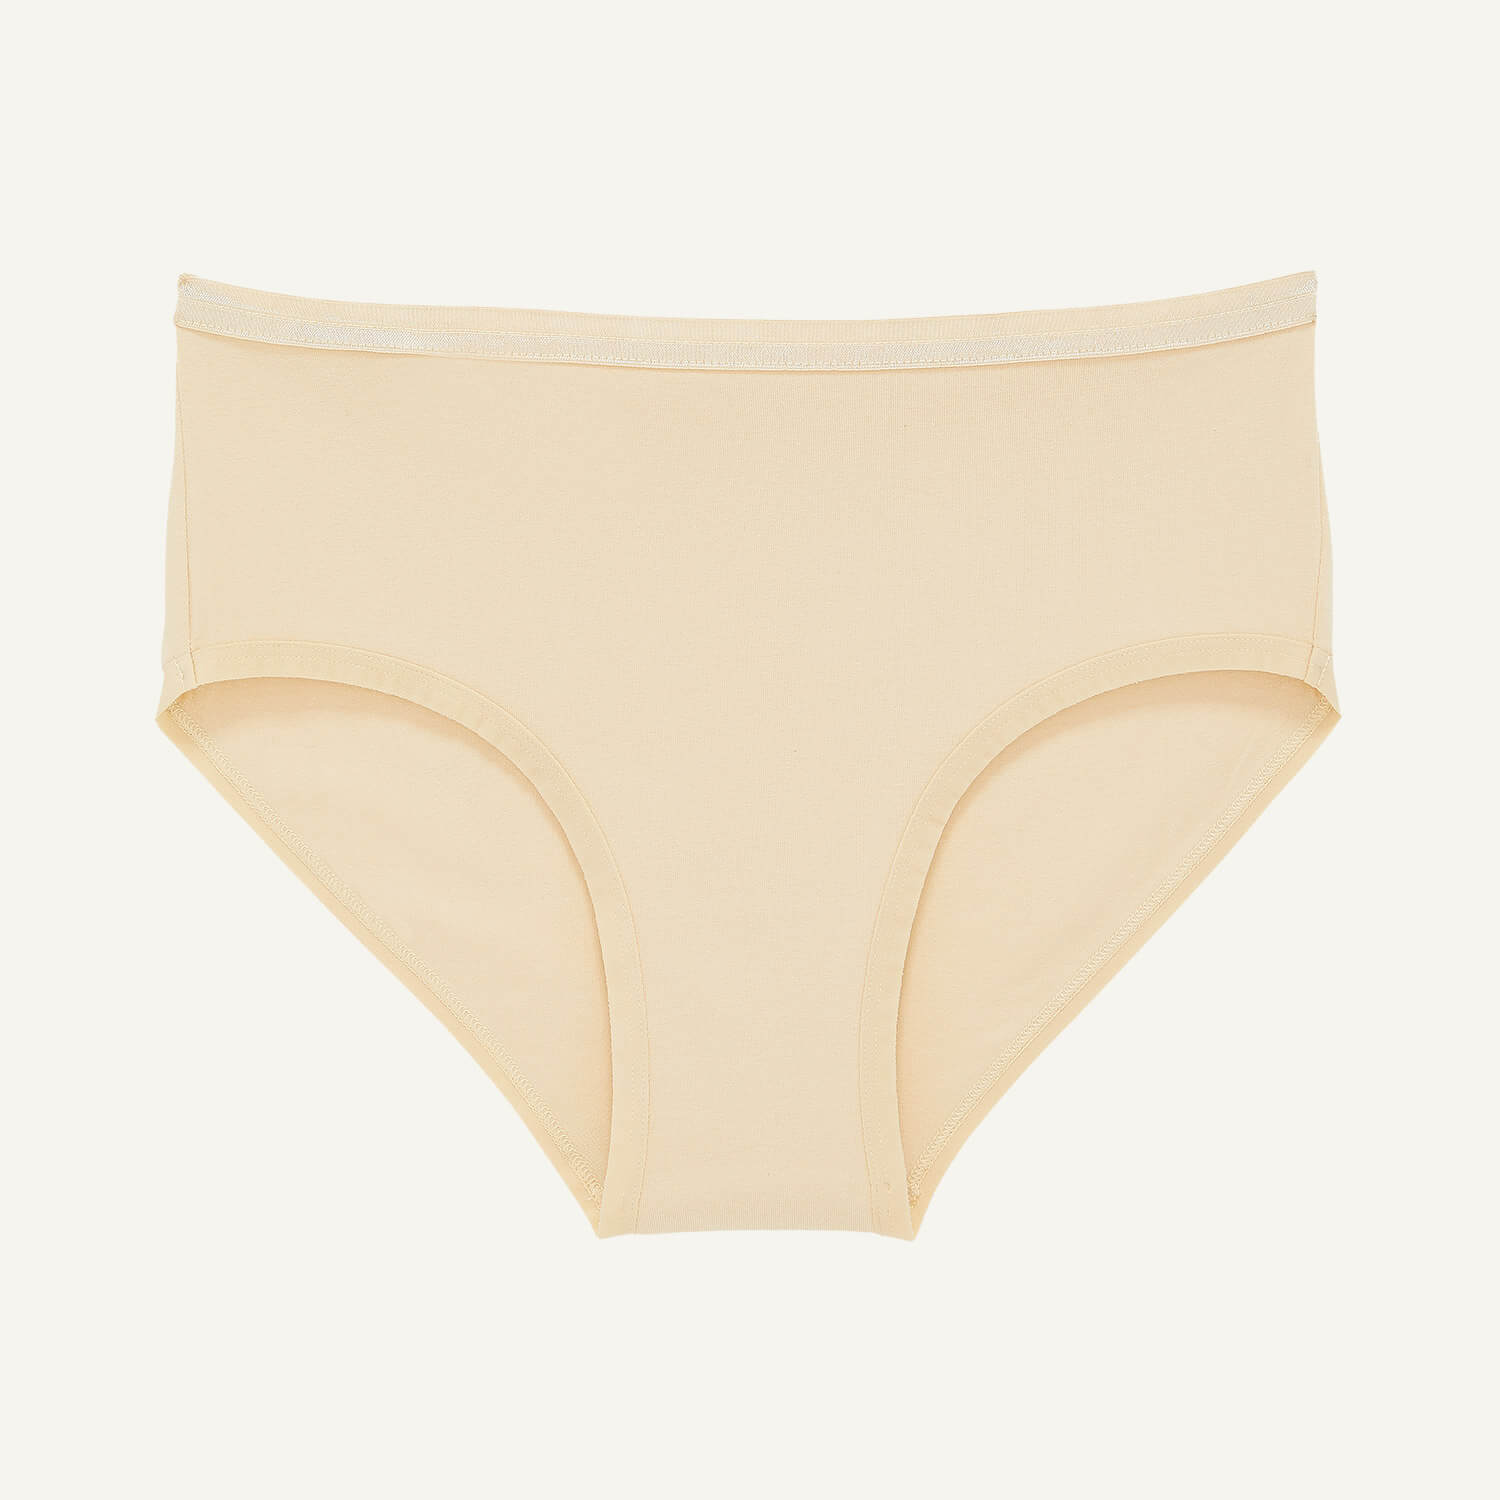 A pair of beige nude women's underwear by Subset/ Knickey.